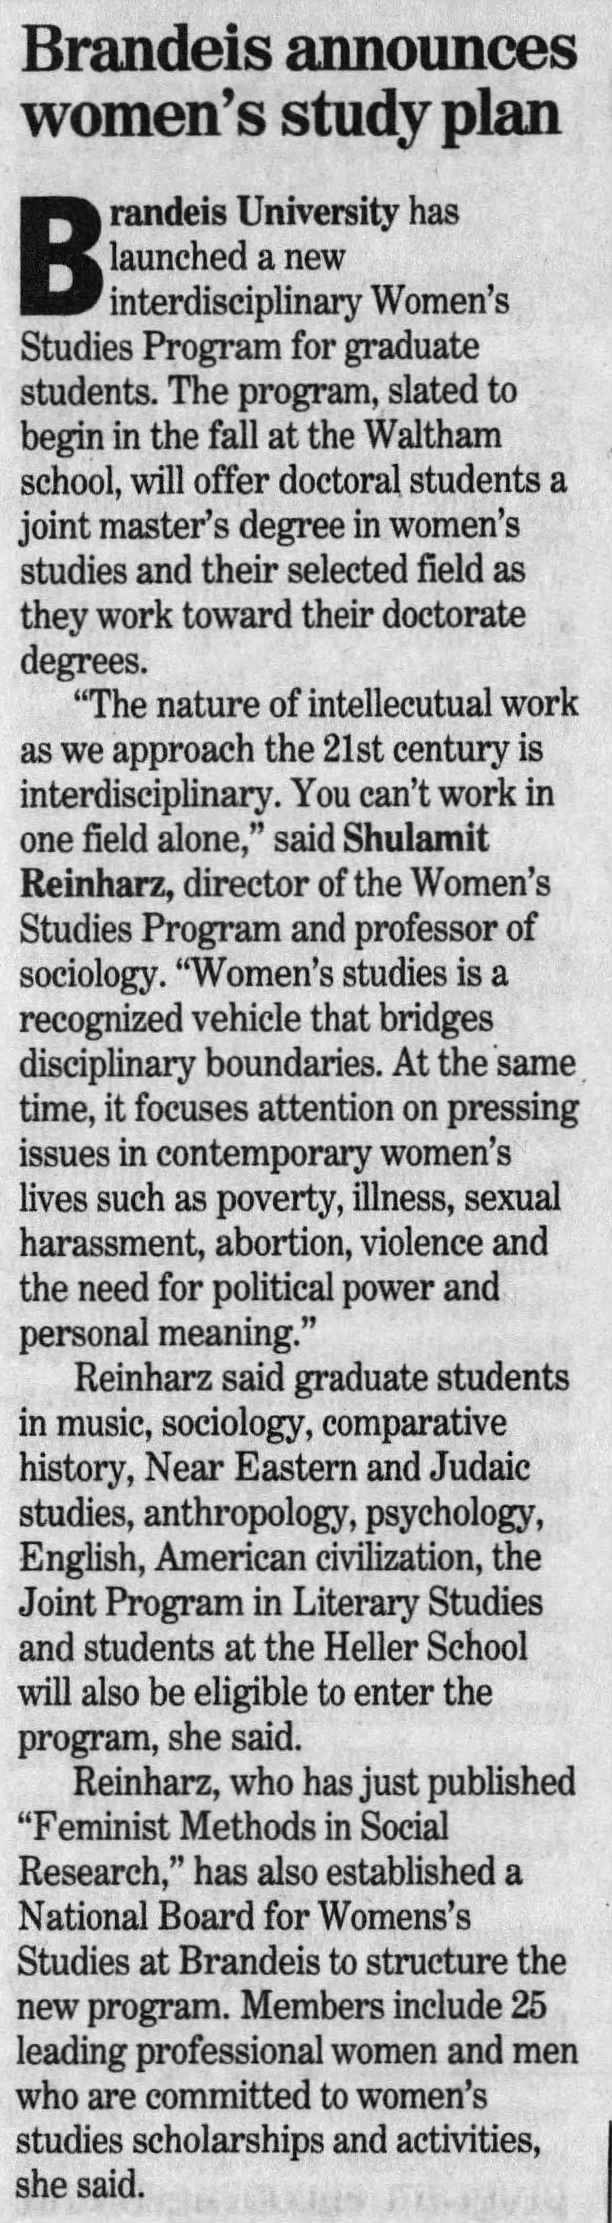 Brandeis announces women's study plan. The Boston Globe (Boston, Massachusetts) 12 July 1992, p 15